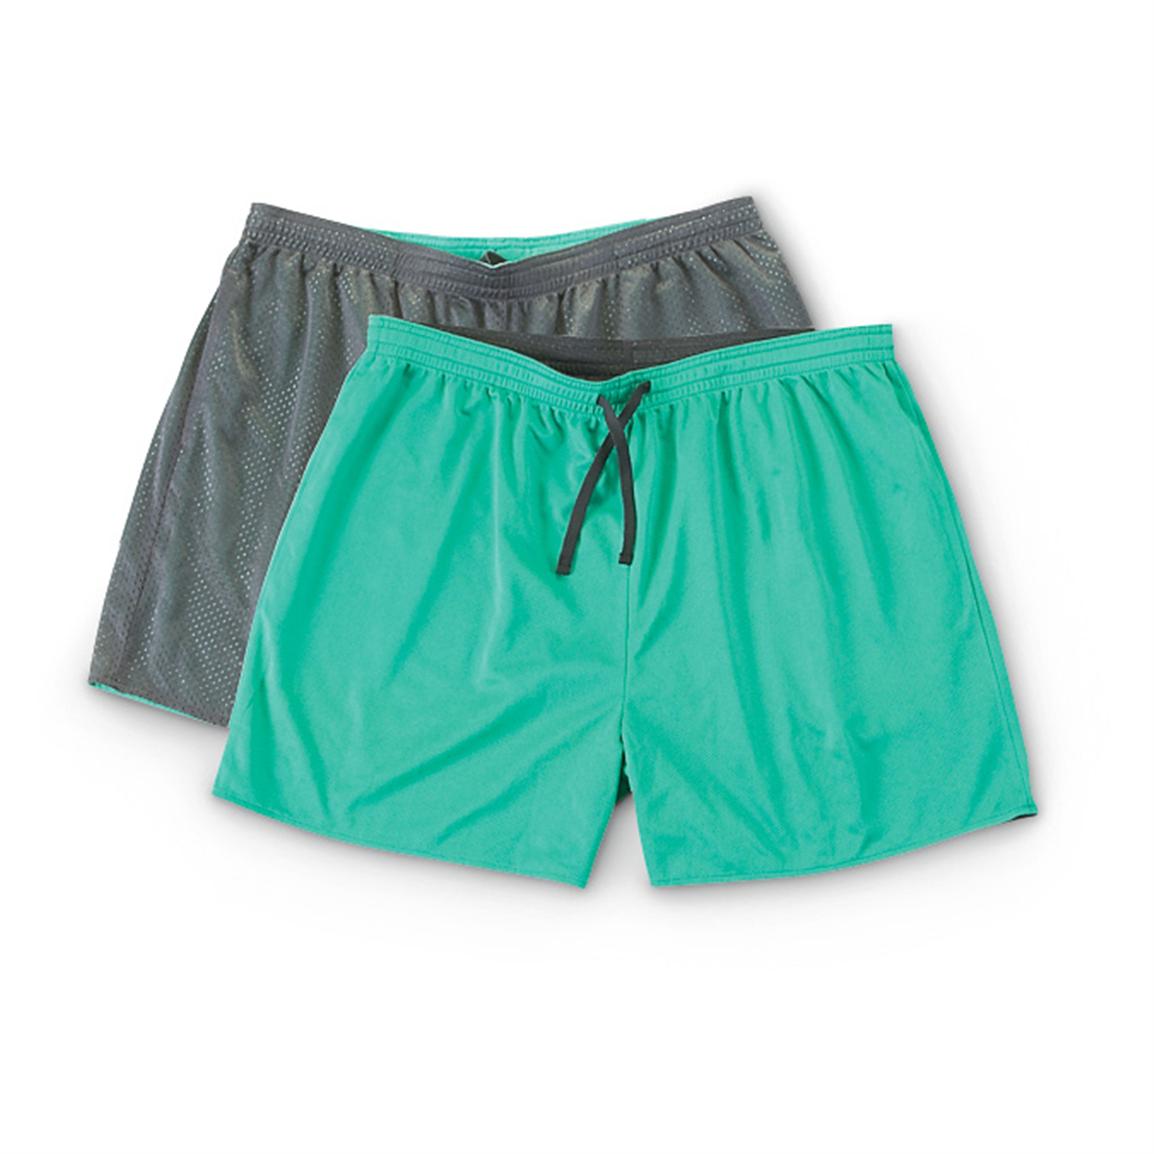 Men's Reversible Mesh Shorts, 2 Pack - 578258, Shorts at Sportsman's Guide